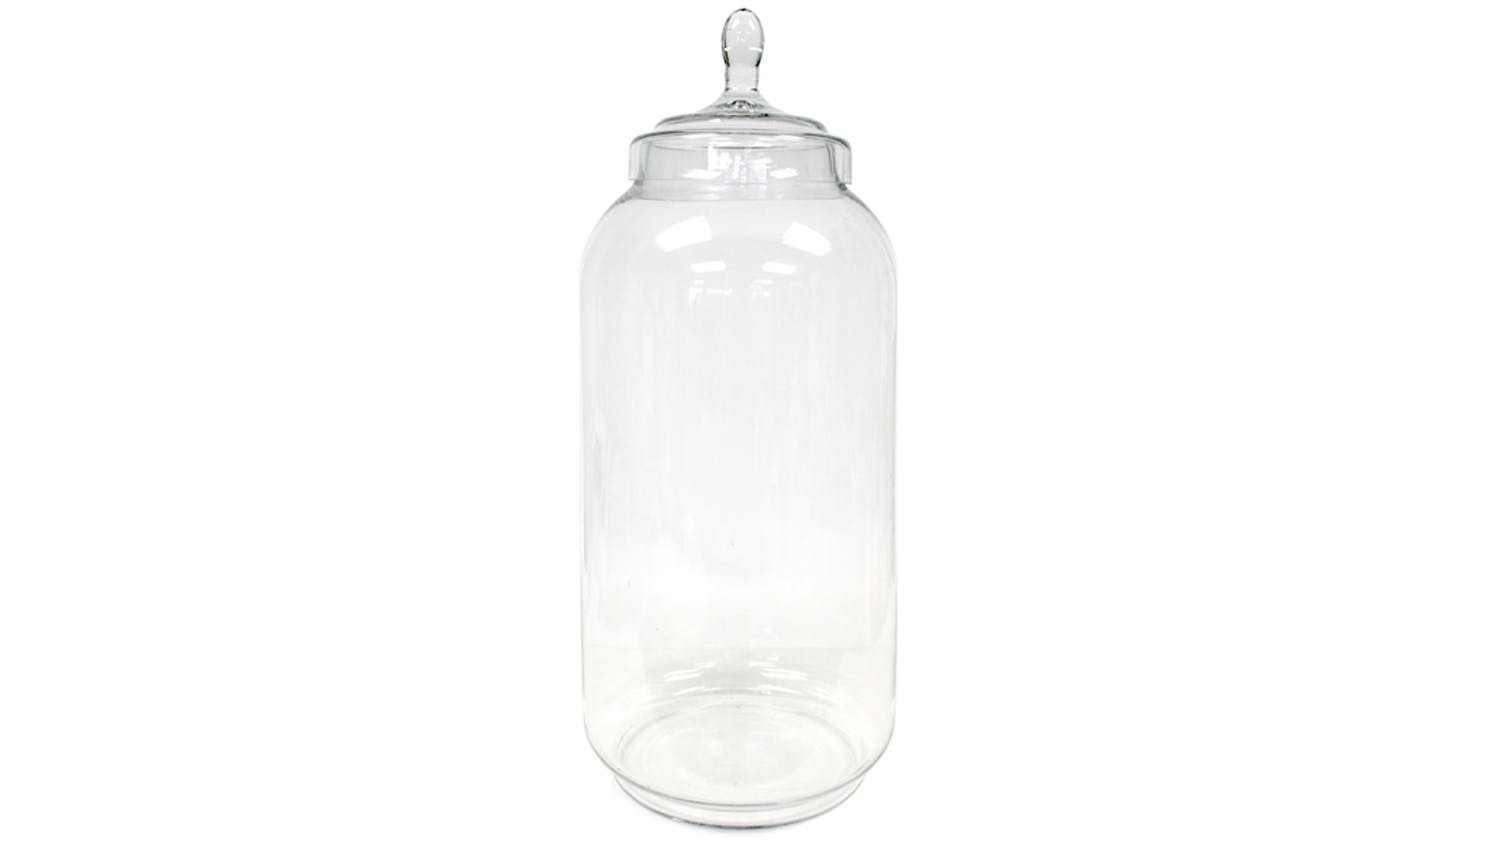 Glass Jar with Glass Lid